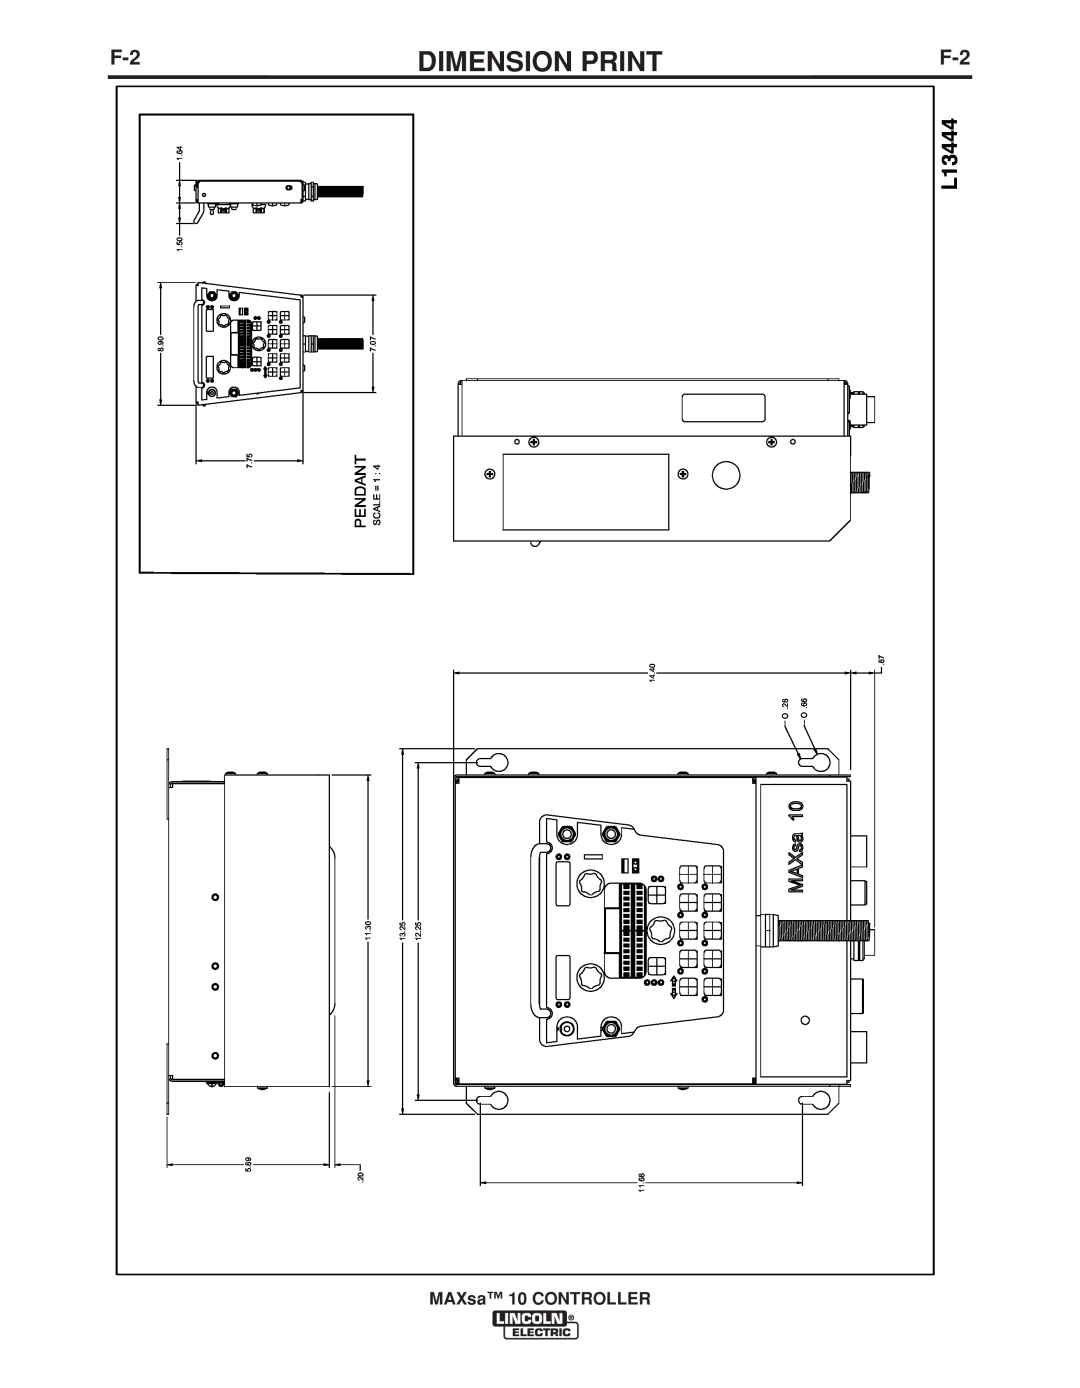 Lincoln Electric IM10023 manual Dimension Print, L13444, 10MAXsaCONTROLLER, SCALE = 1 